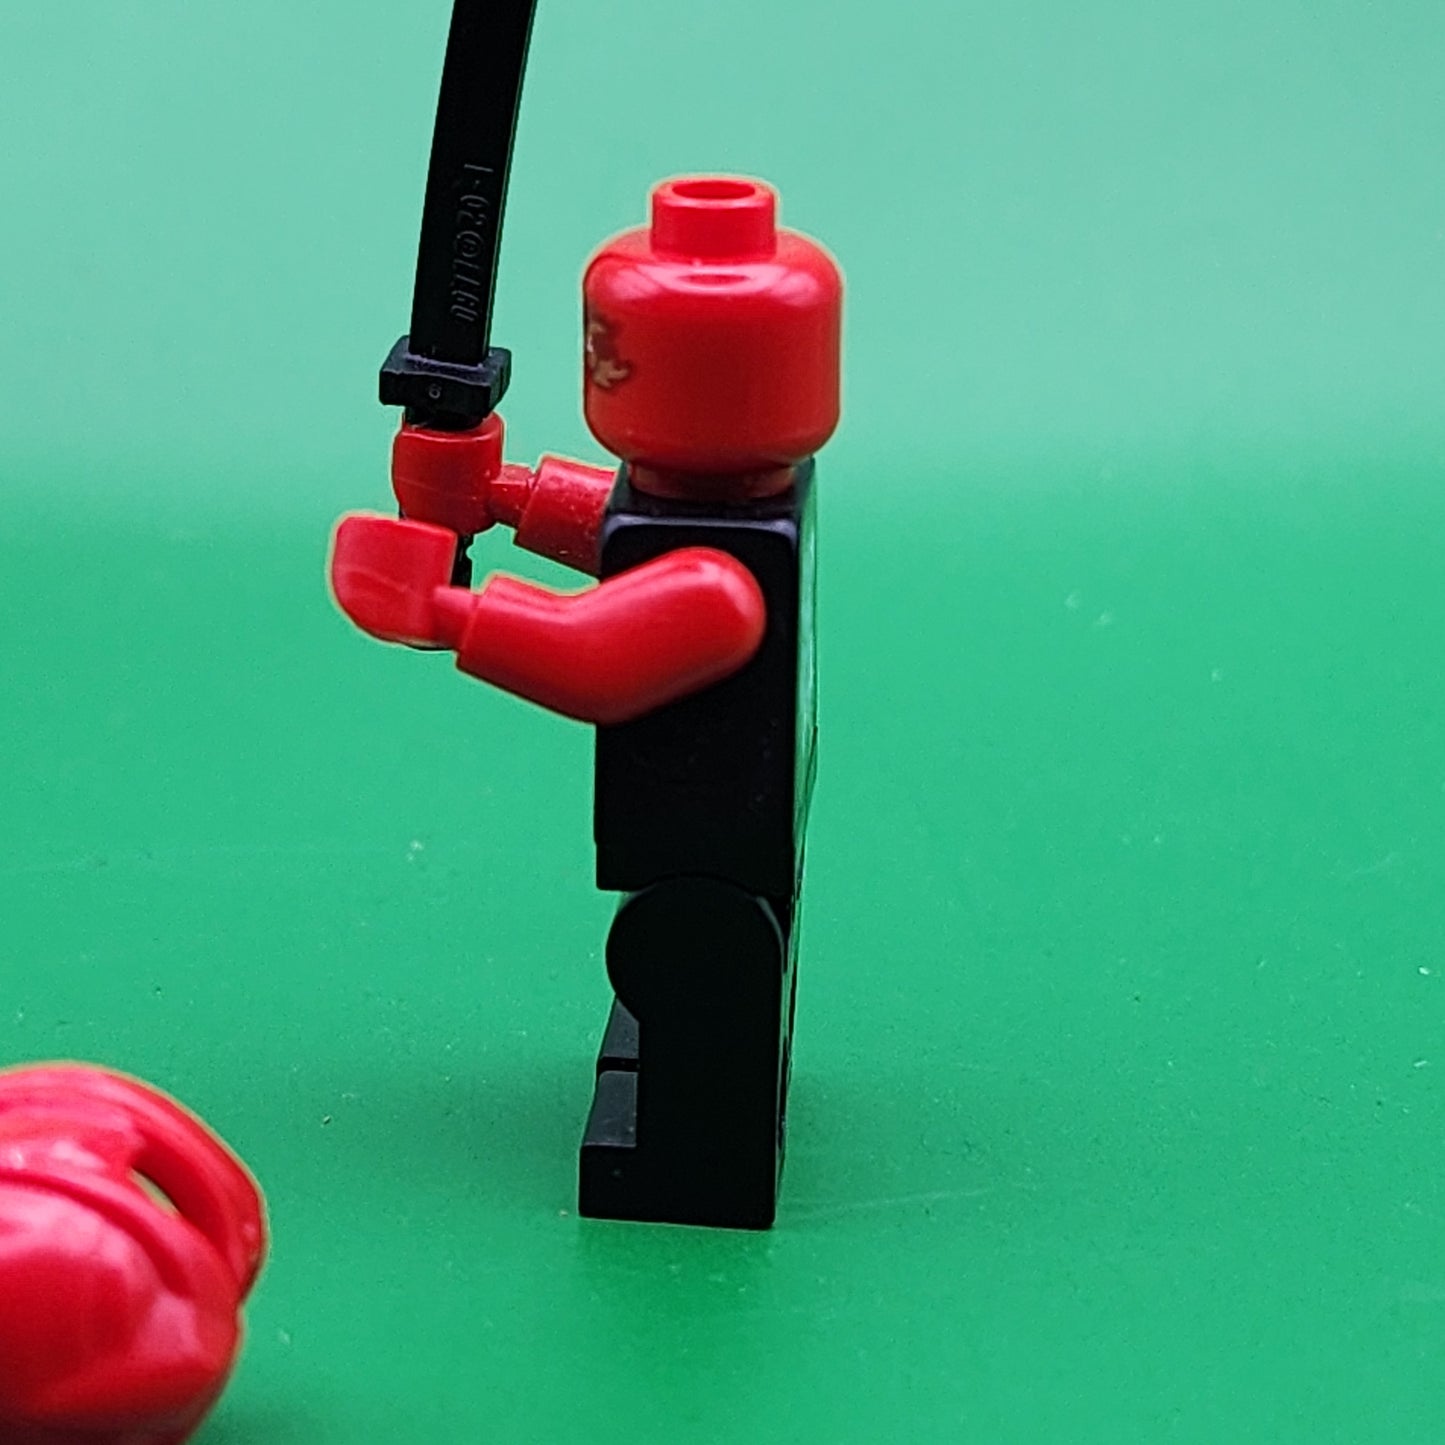 Lego Kai Airjitzu Possession Minifigure njo161 Red Ninja